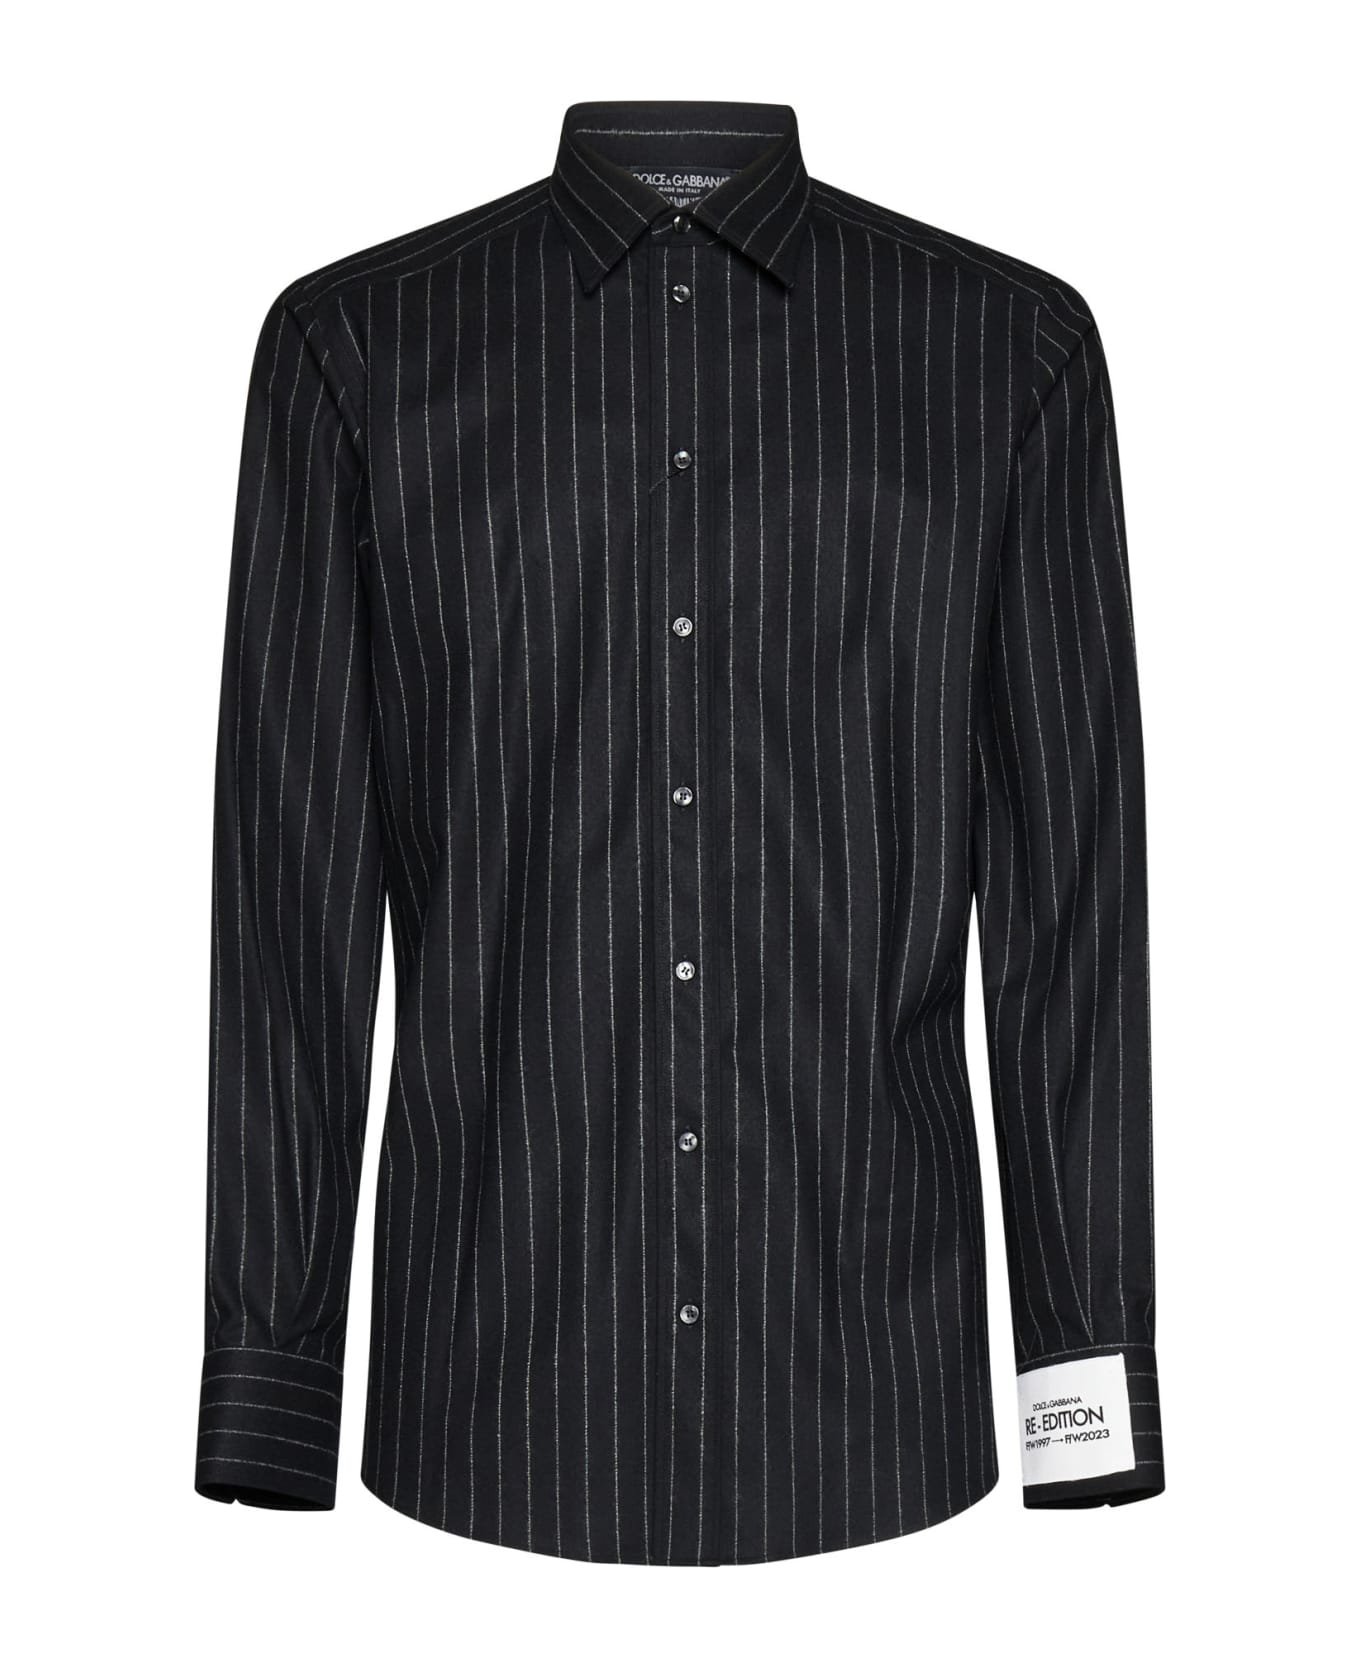 Dolce & Gabbana Dg Shirt - Black